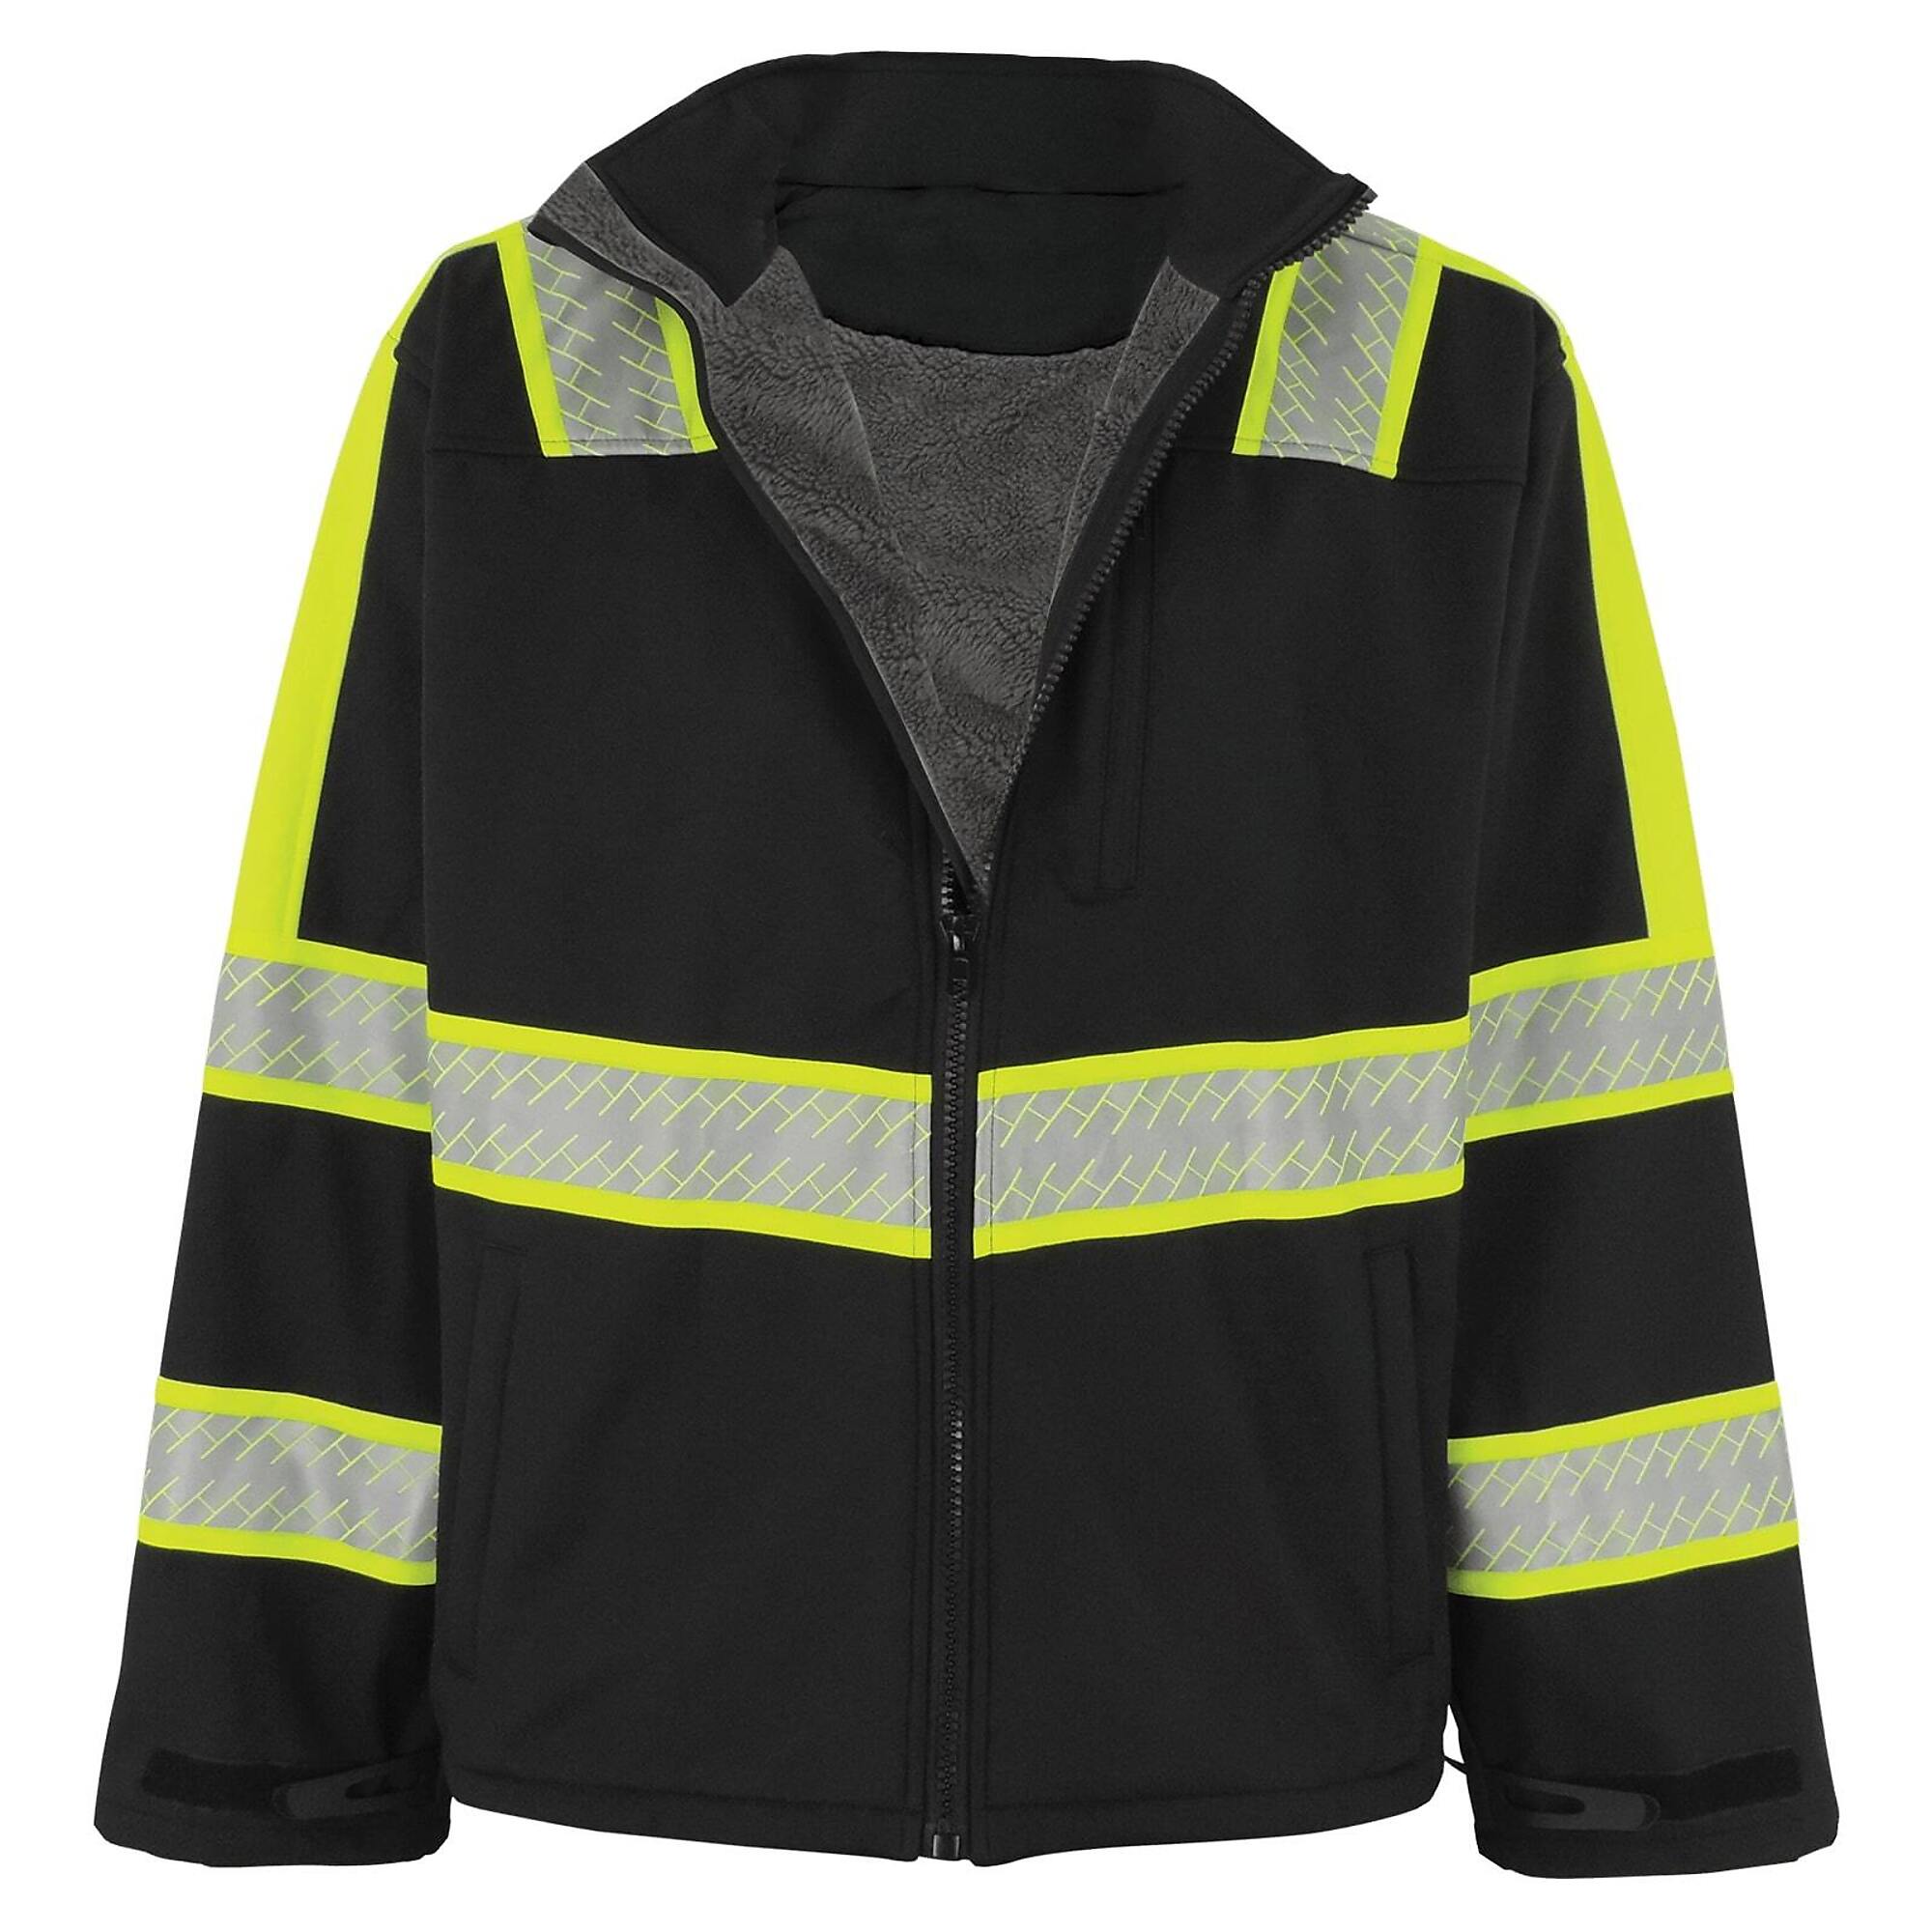 FrogWear, Prem Enhanced Visibility Black Sherpa-Lined Jacket, Size 2XL, Color Black with Silver Reflective, Model EV-SJ1-2XL